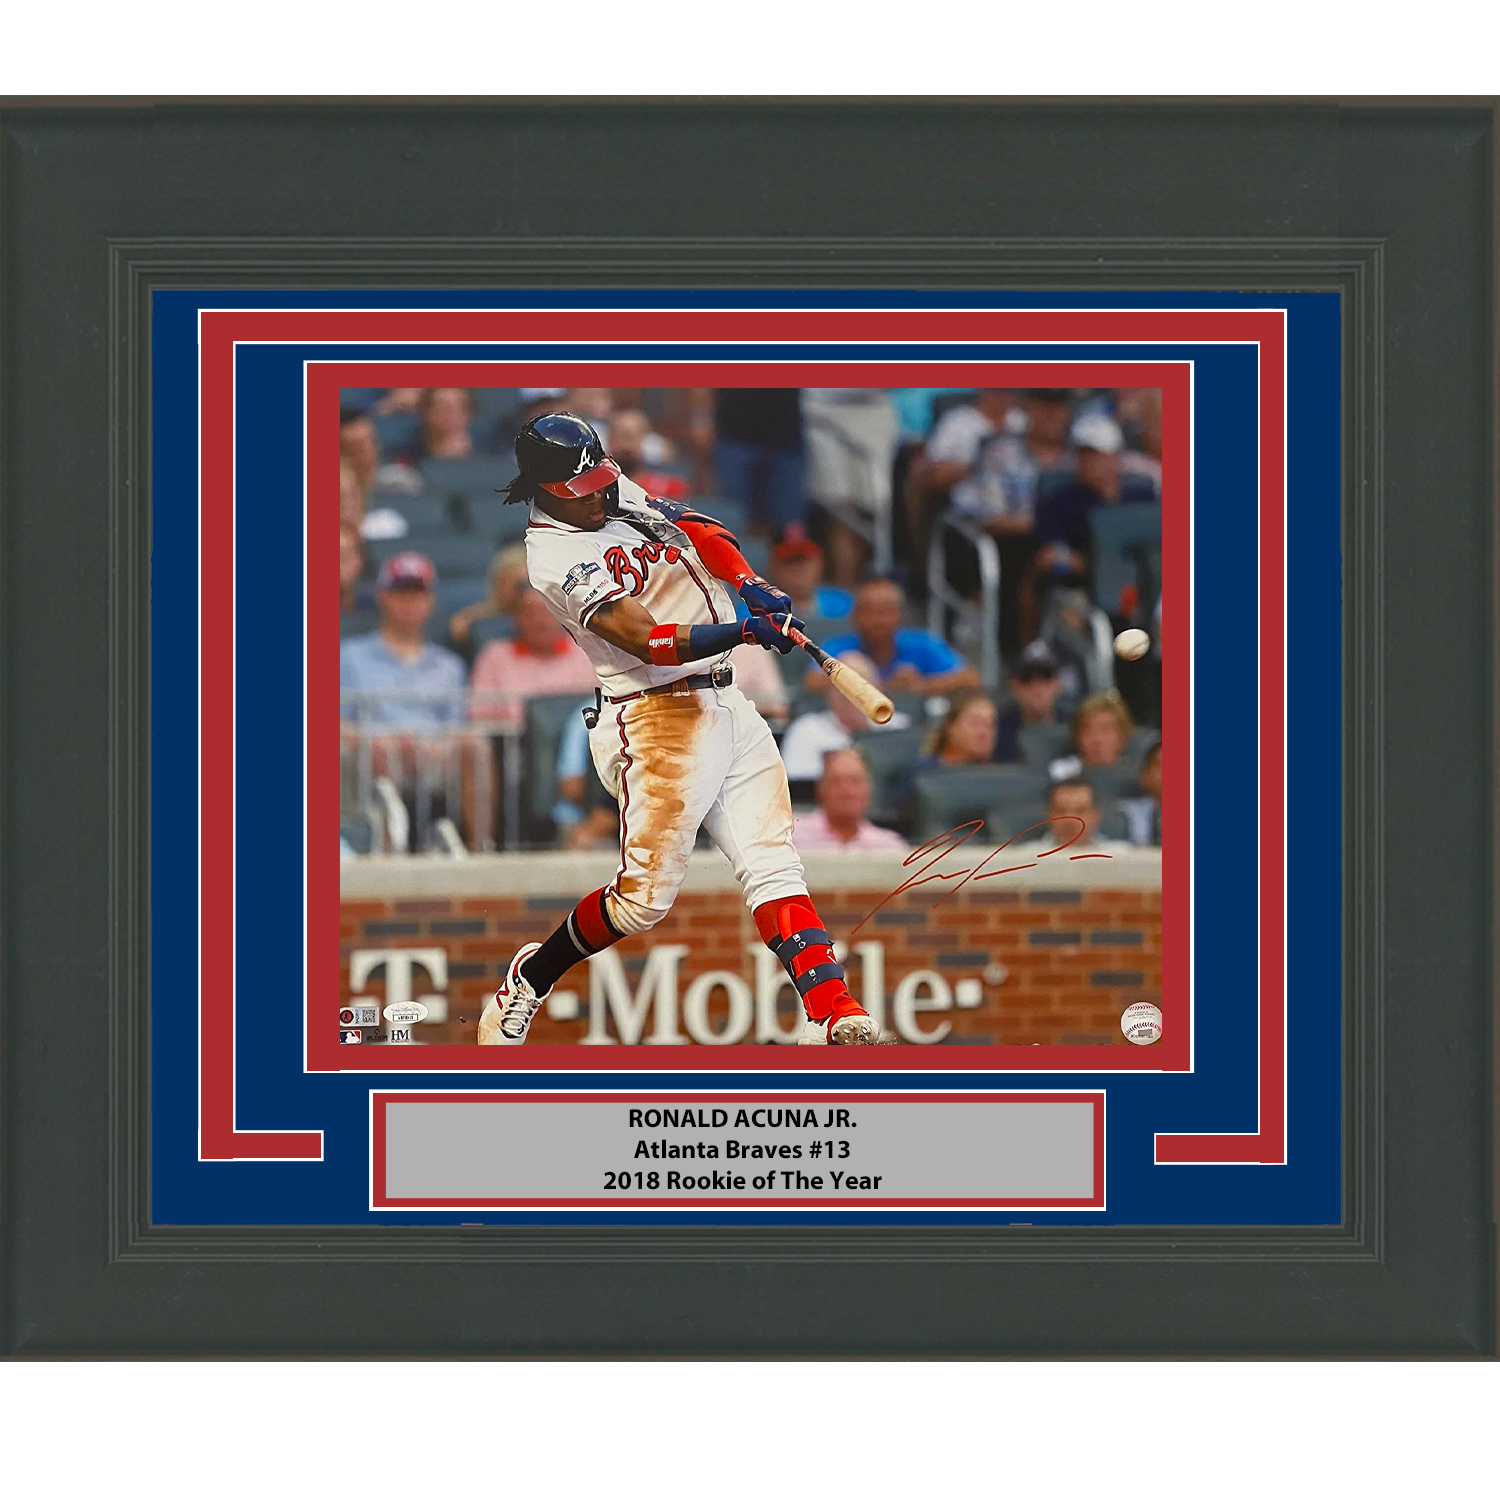 Framed Autographed/Signed Ronald Acuna Jr. Atlanta Braves 16x20 Baseball  Photo JSA COA #10 - Hall of Fame Sports Memorabilia